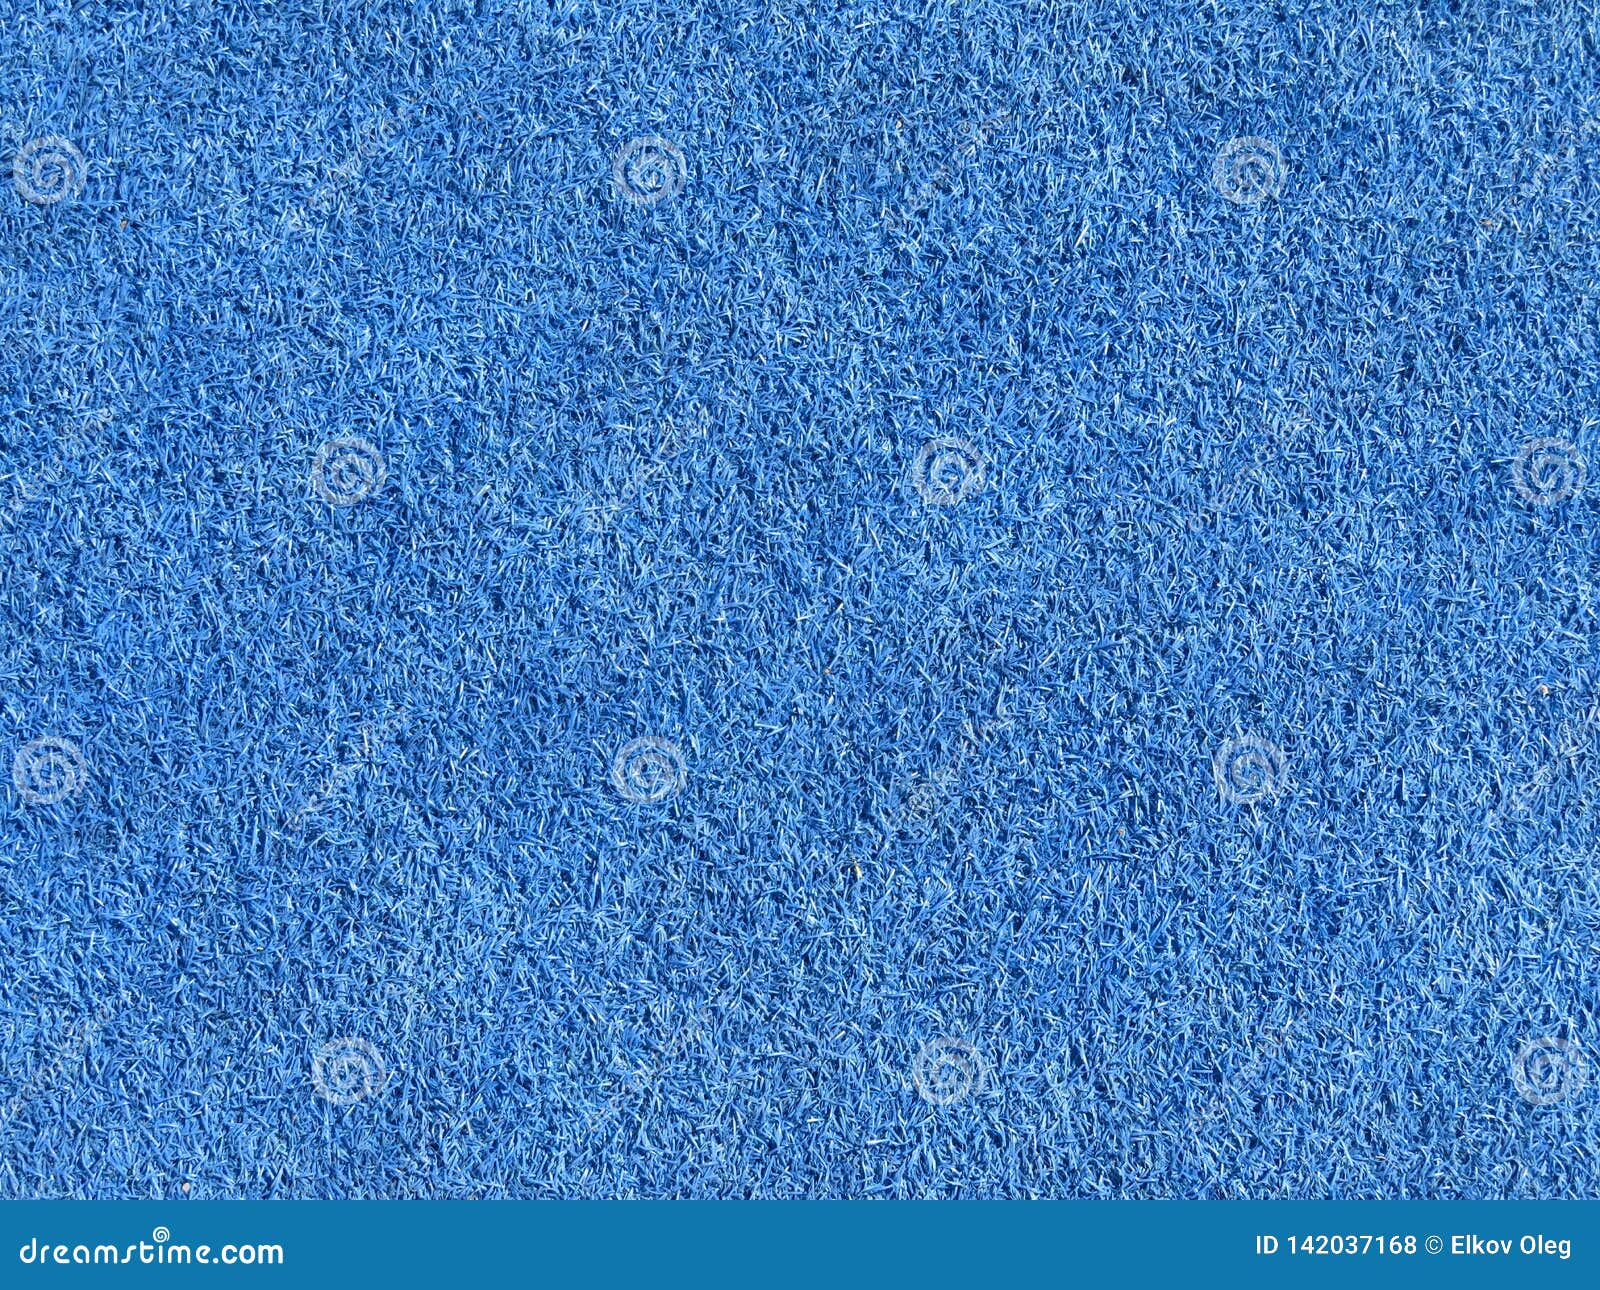 Seamless Blue Plastic Carpet Texture Stock Photo - Image of floor ...